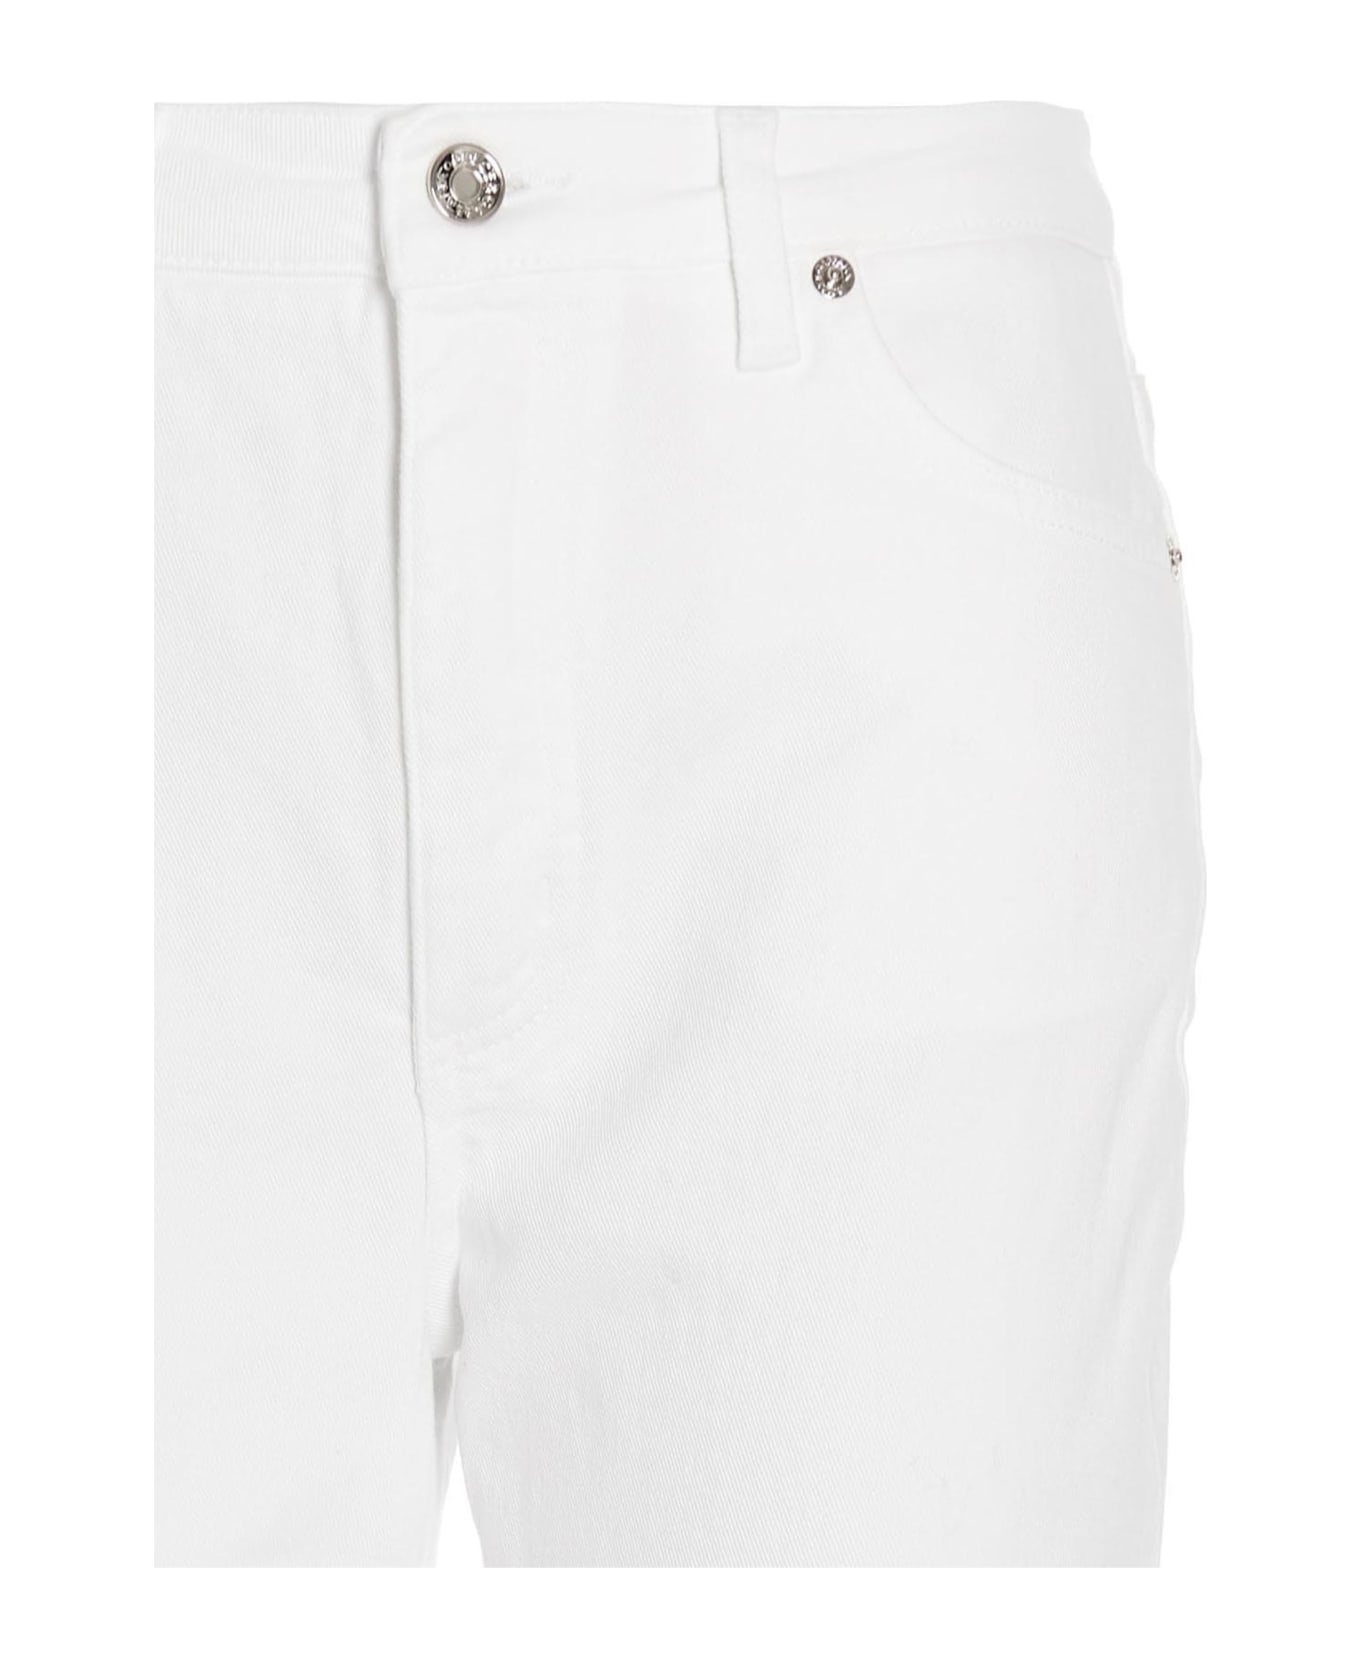 Dolce & Gabbana Audrey Jeans - White ボトムス